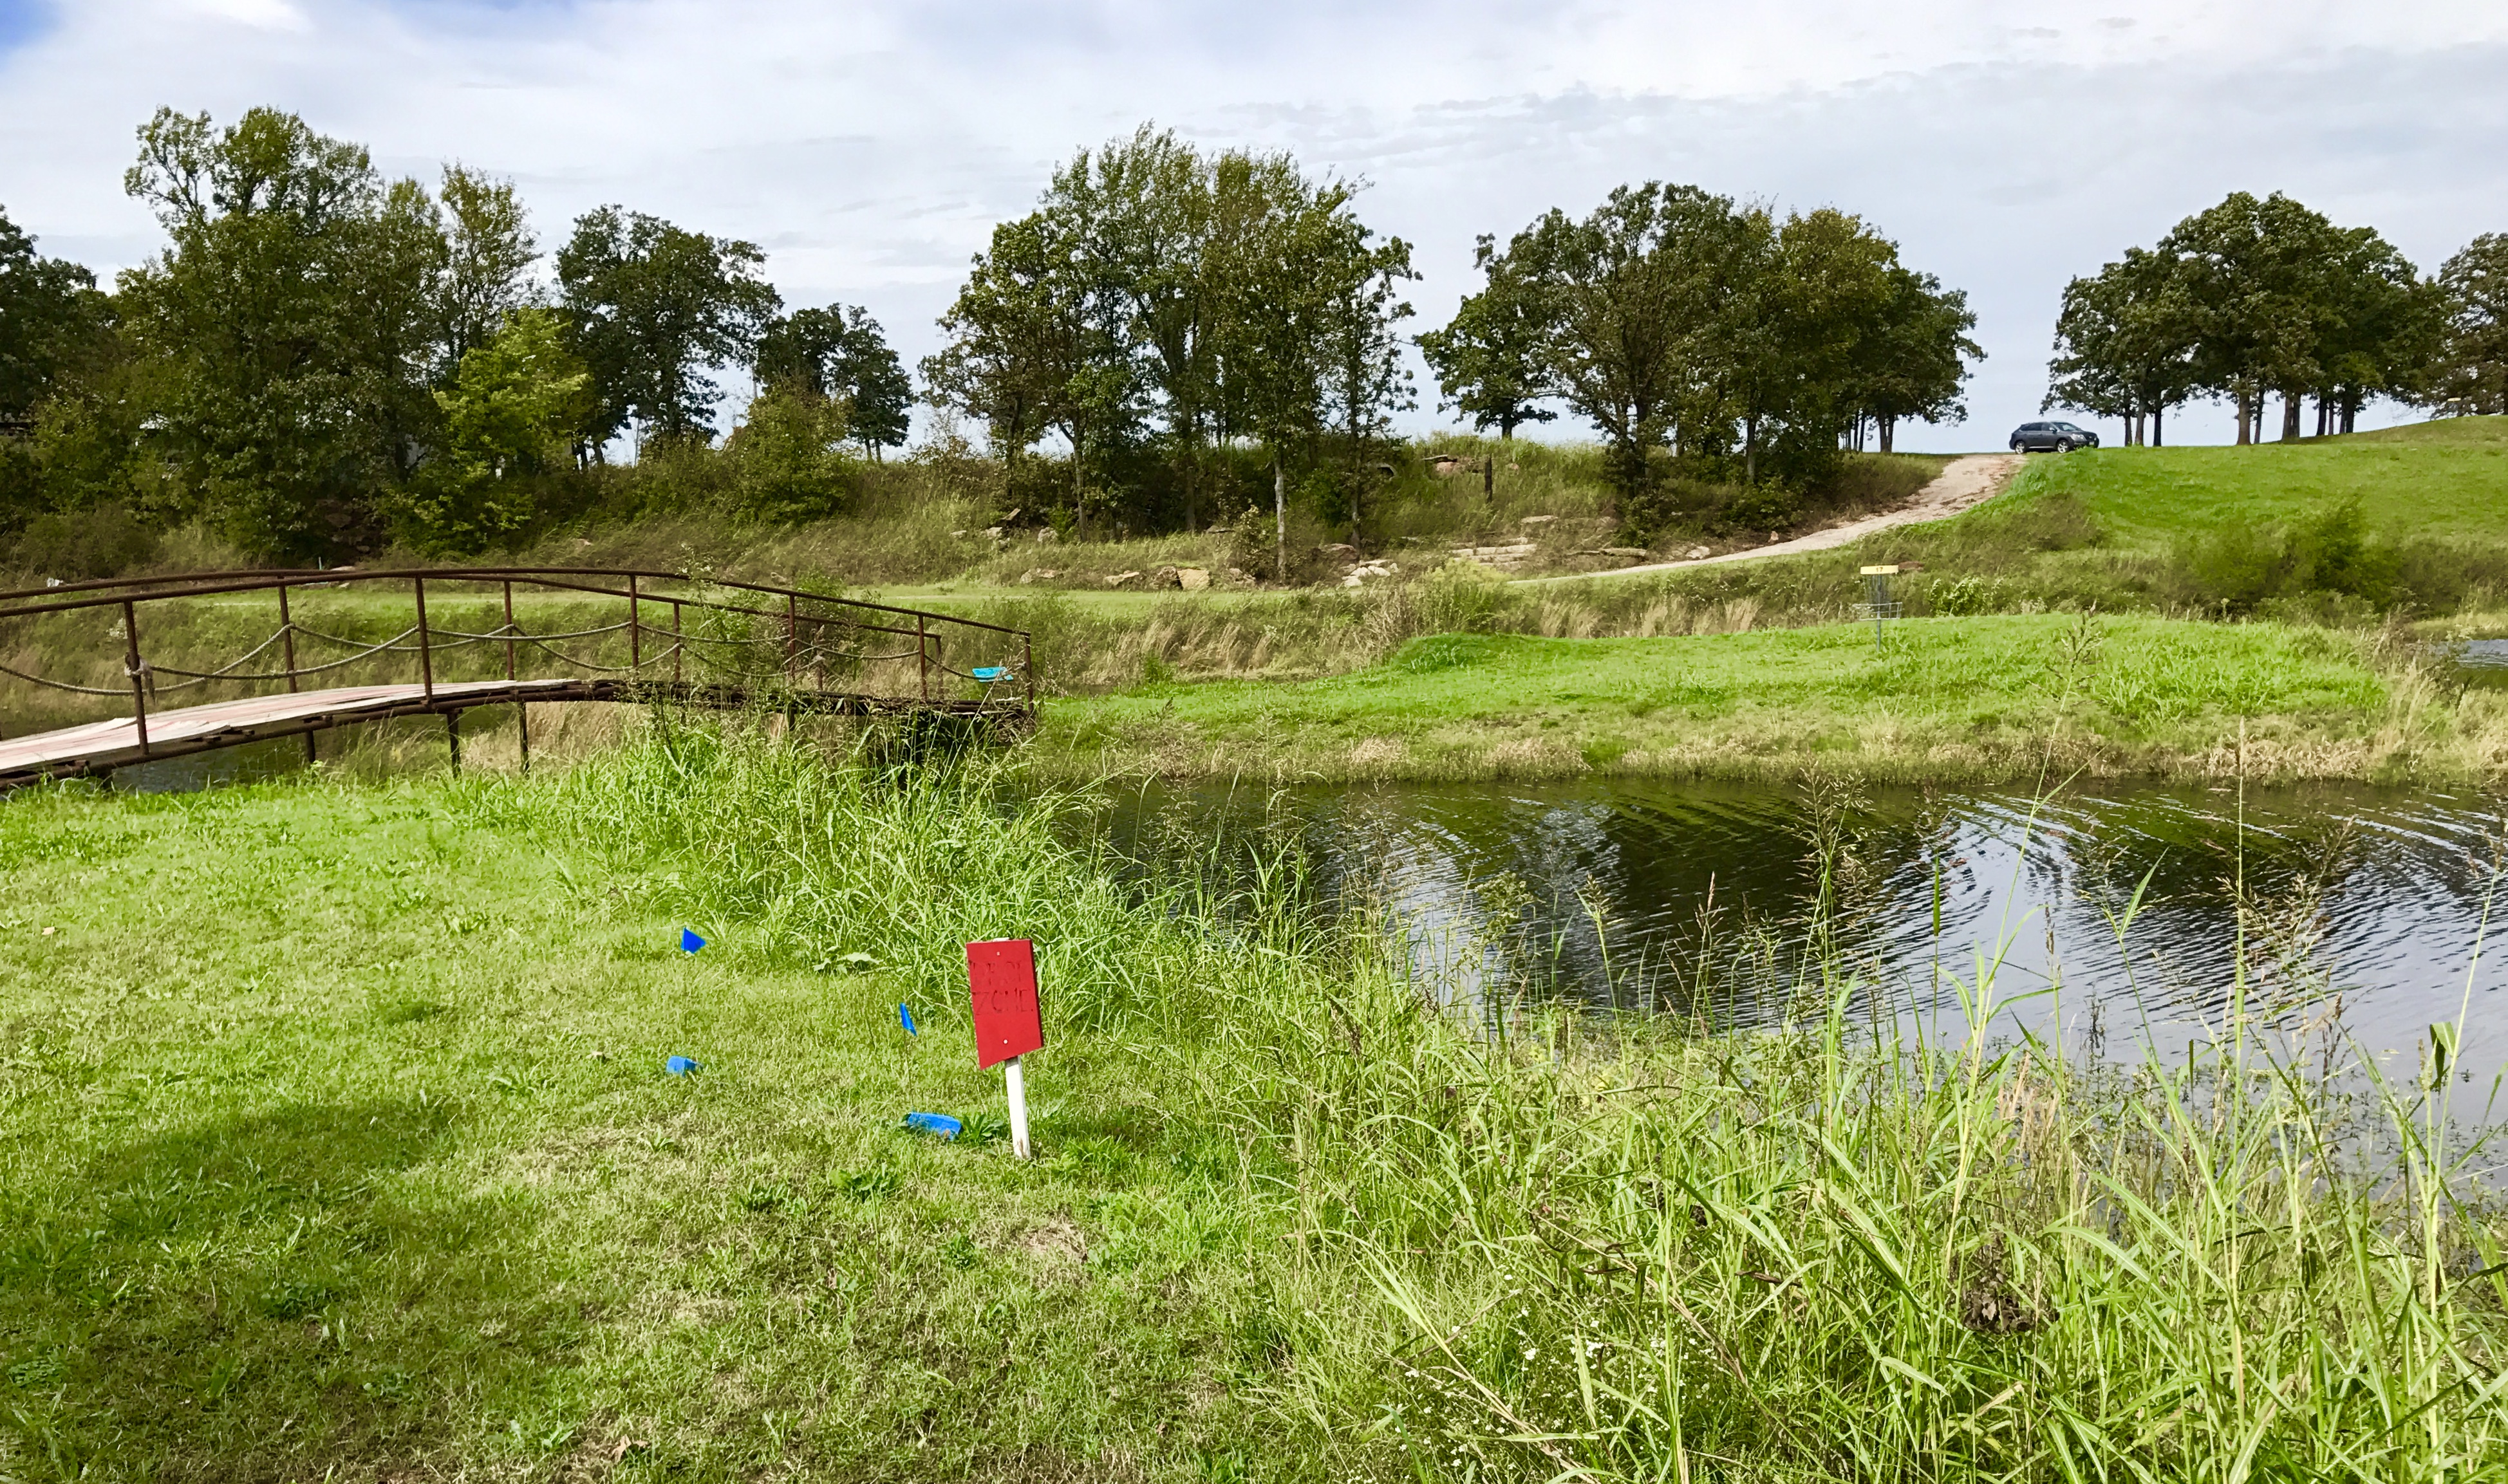 Taylor Ranch disc golf course in Pawhuska, Oklahoma.